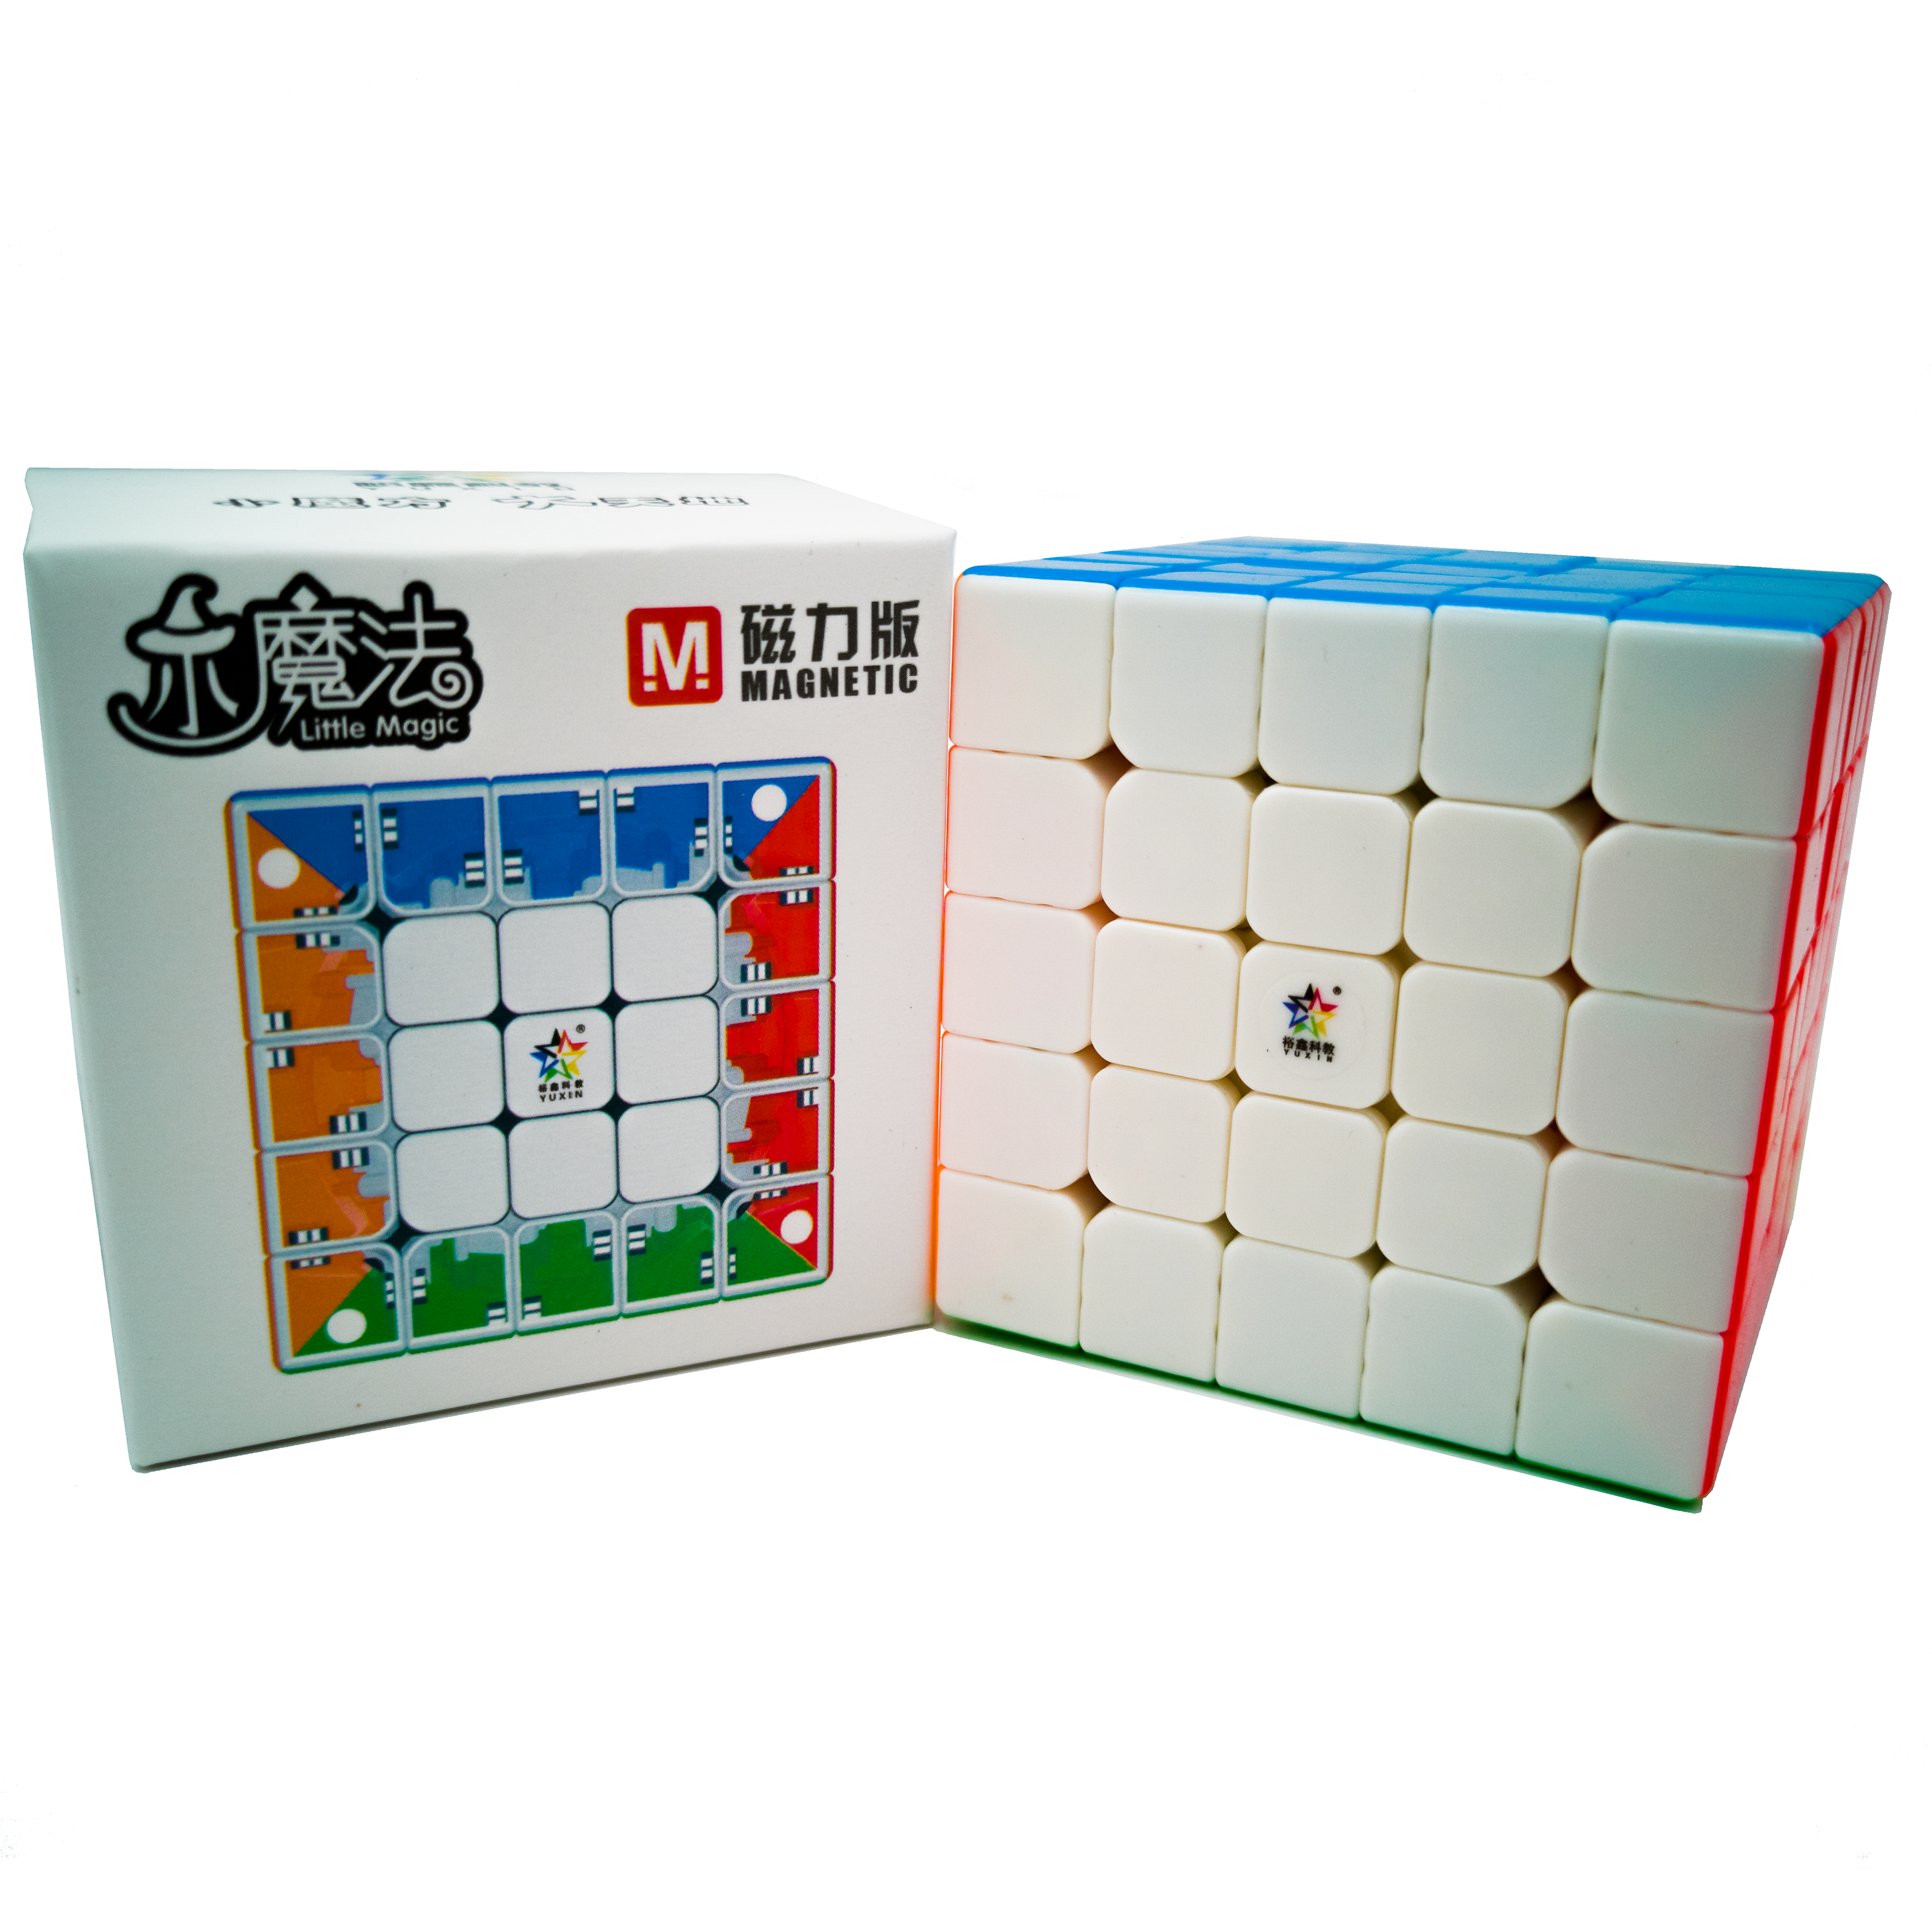 YuXin Little Magic 5x5 M - CuberSpace - Speedcube - Singapore